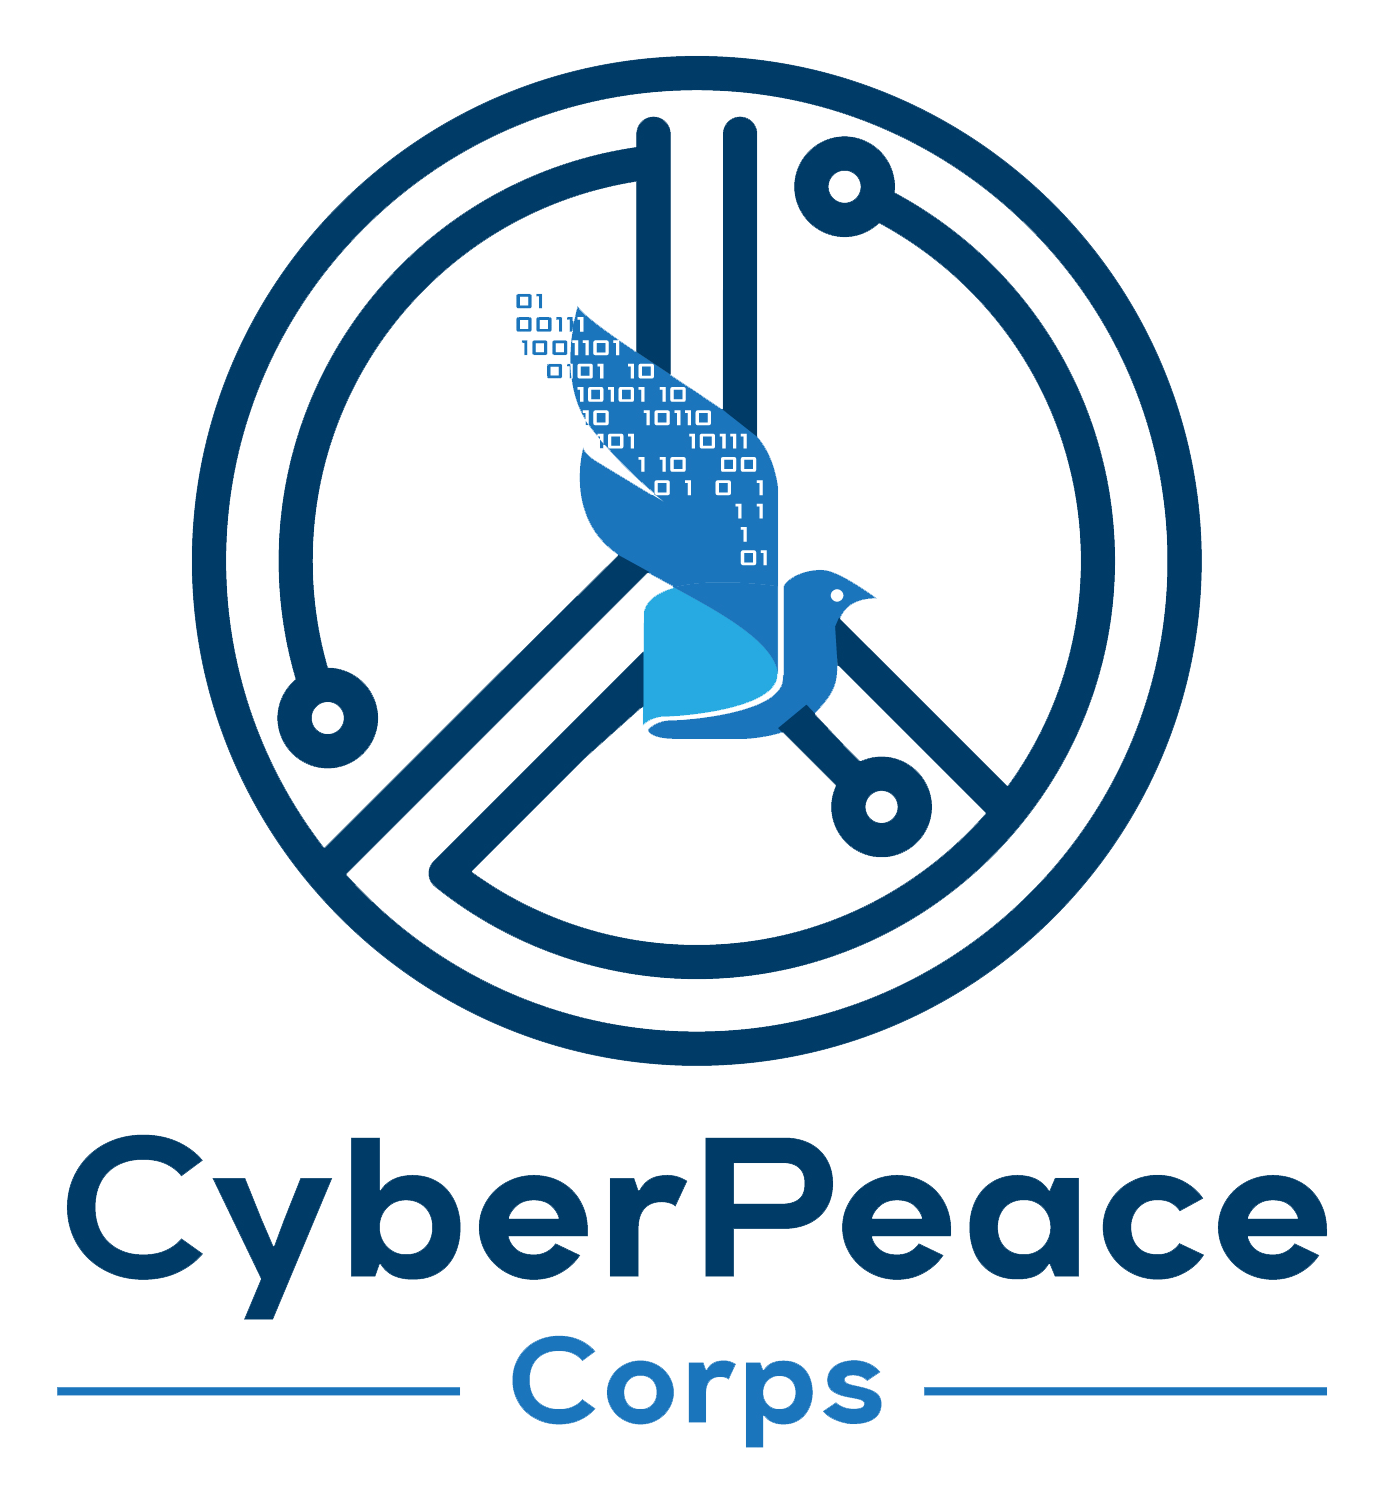 CyberPeace Corps